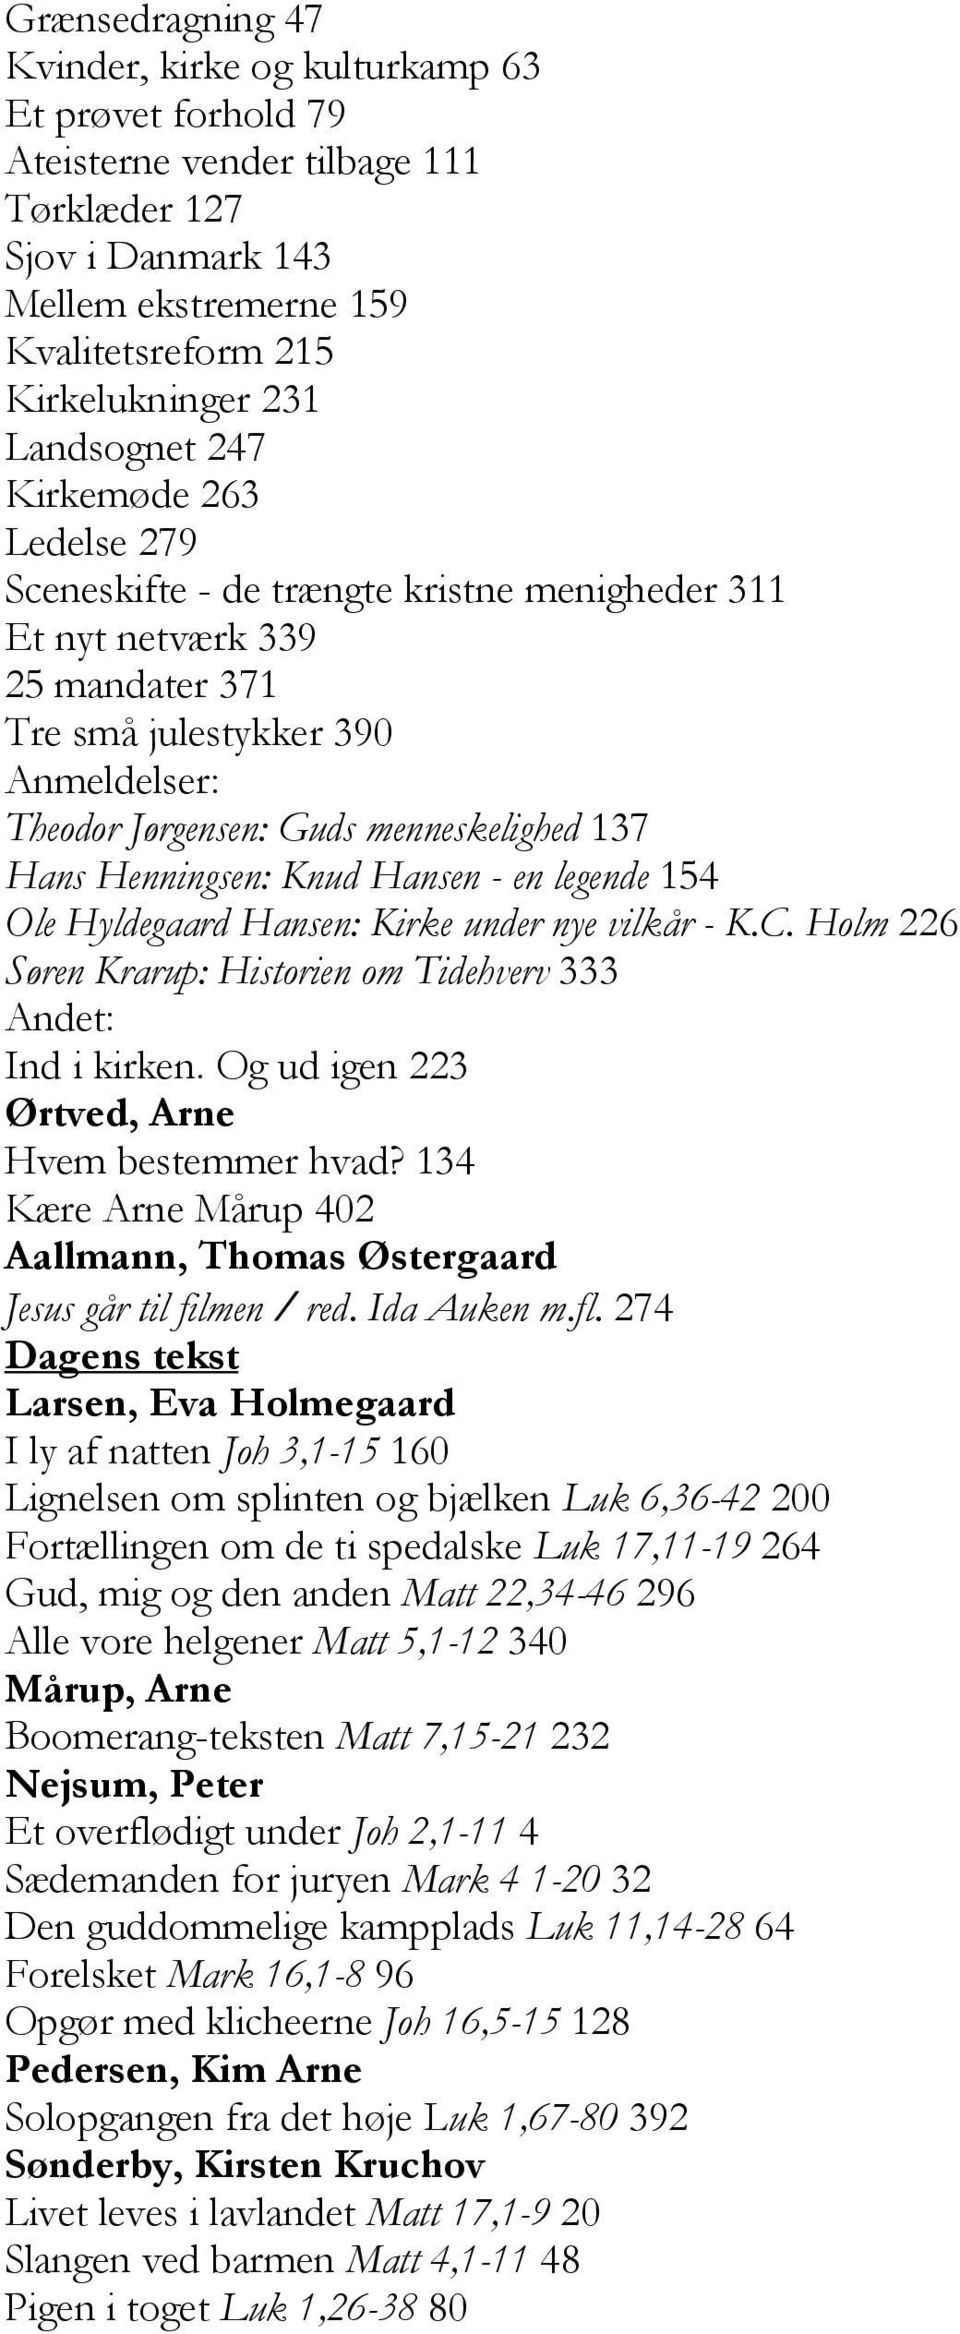 137 Hans Henningsen: Knud Hansen - en legende 154 Ole Hyldegaard Hansen: Kirke under nye vilkår - K.C. Holm 226 Søren Krarup: Historien om Tidehverv 333 Andet: Ind i kirken.